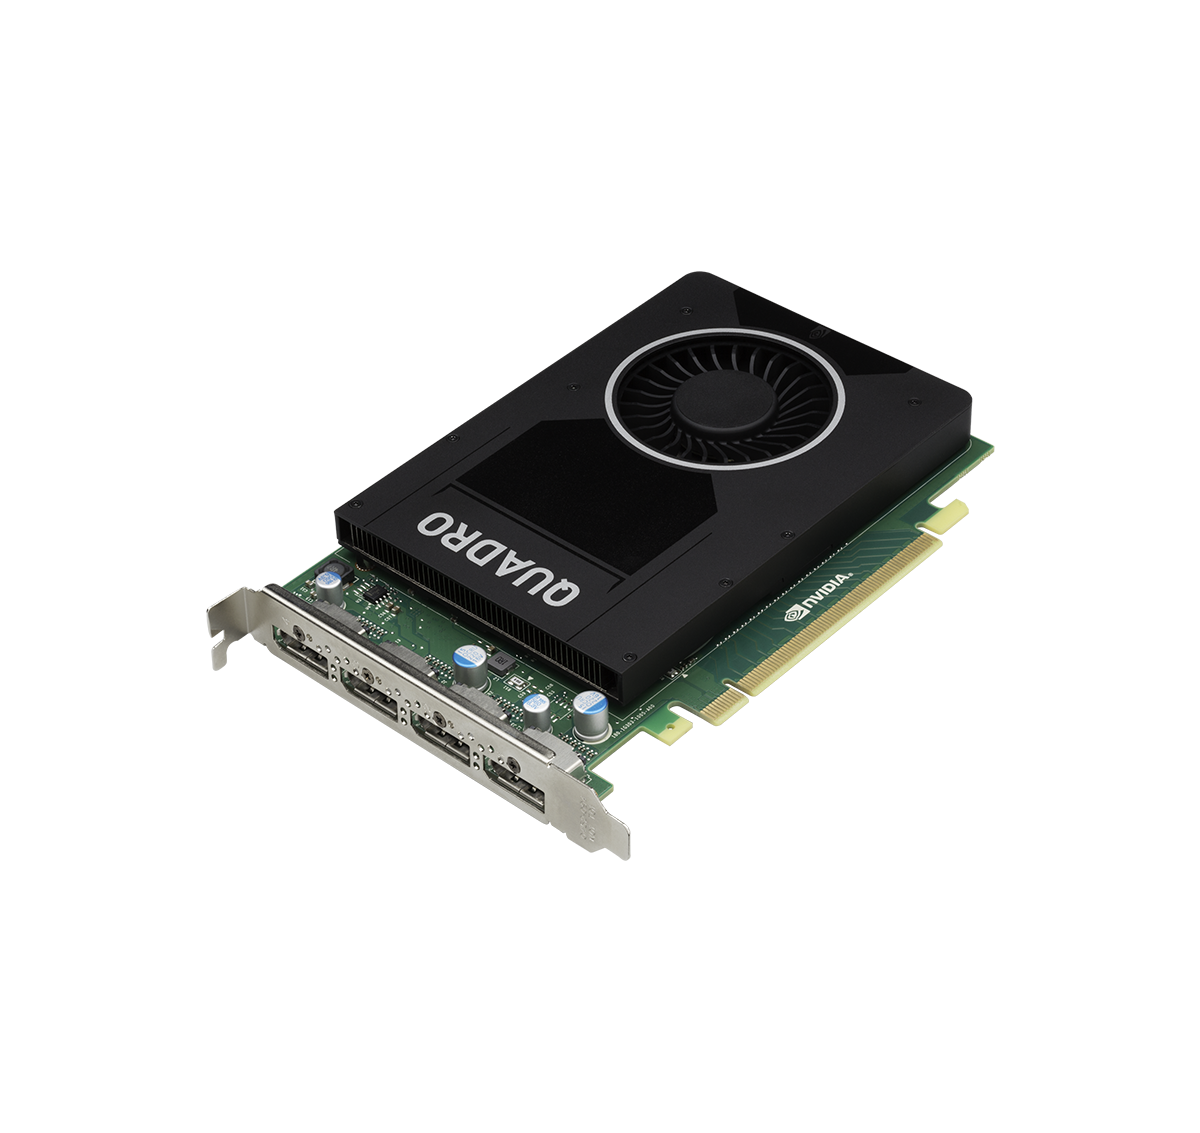 NVIDIA Quadro M2000 - 株式会社 エルザ ジャパン